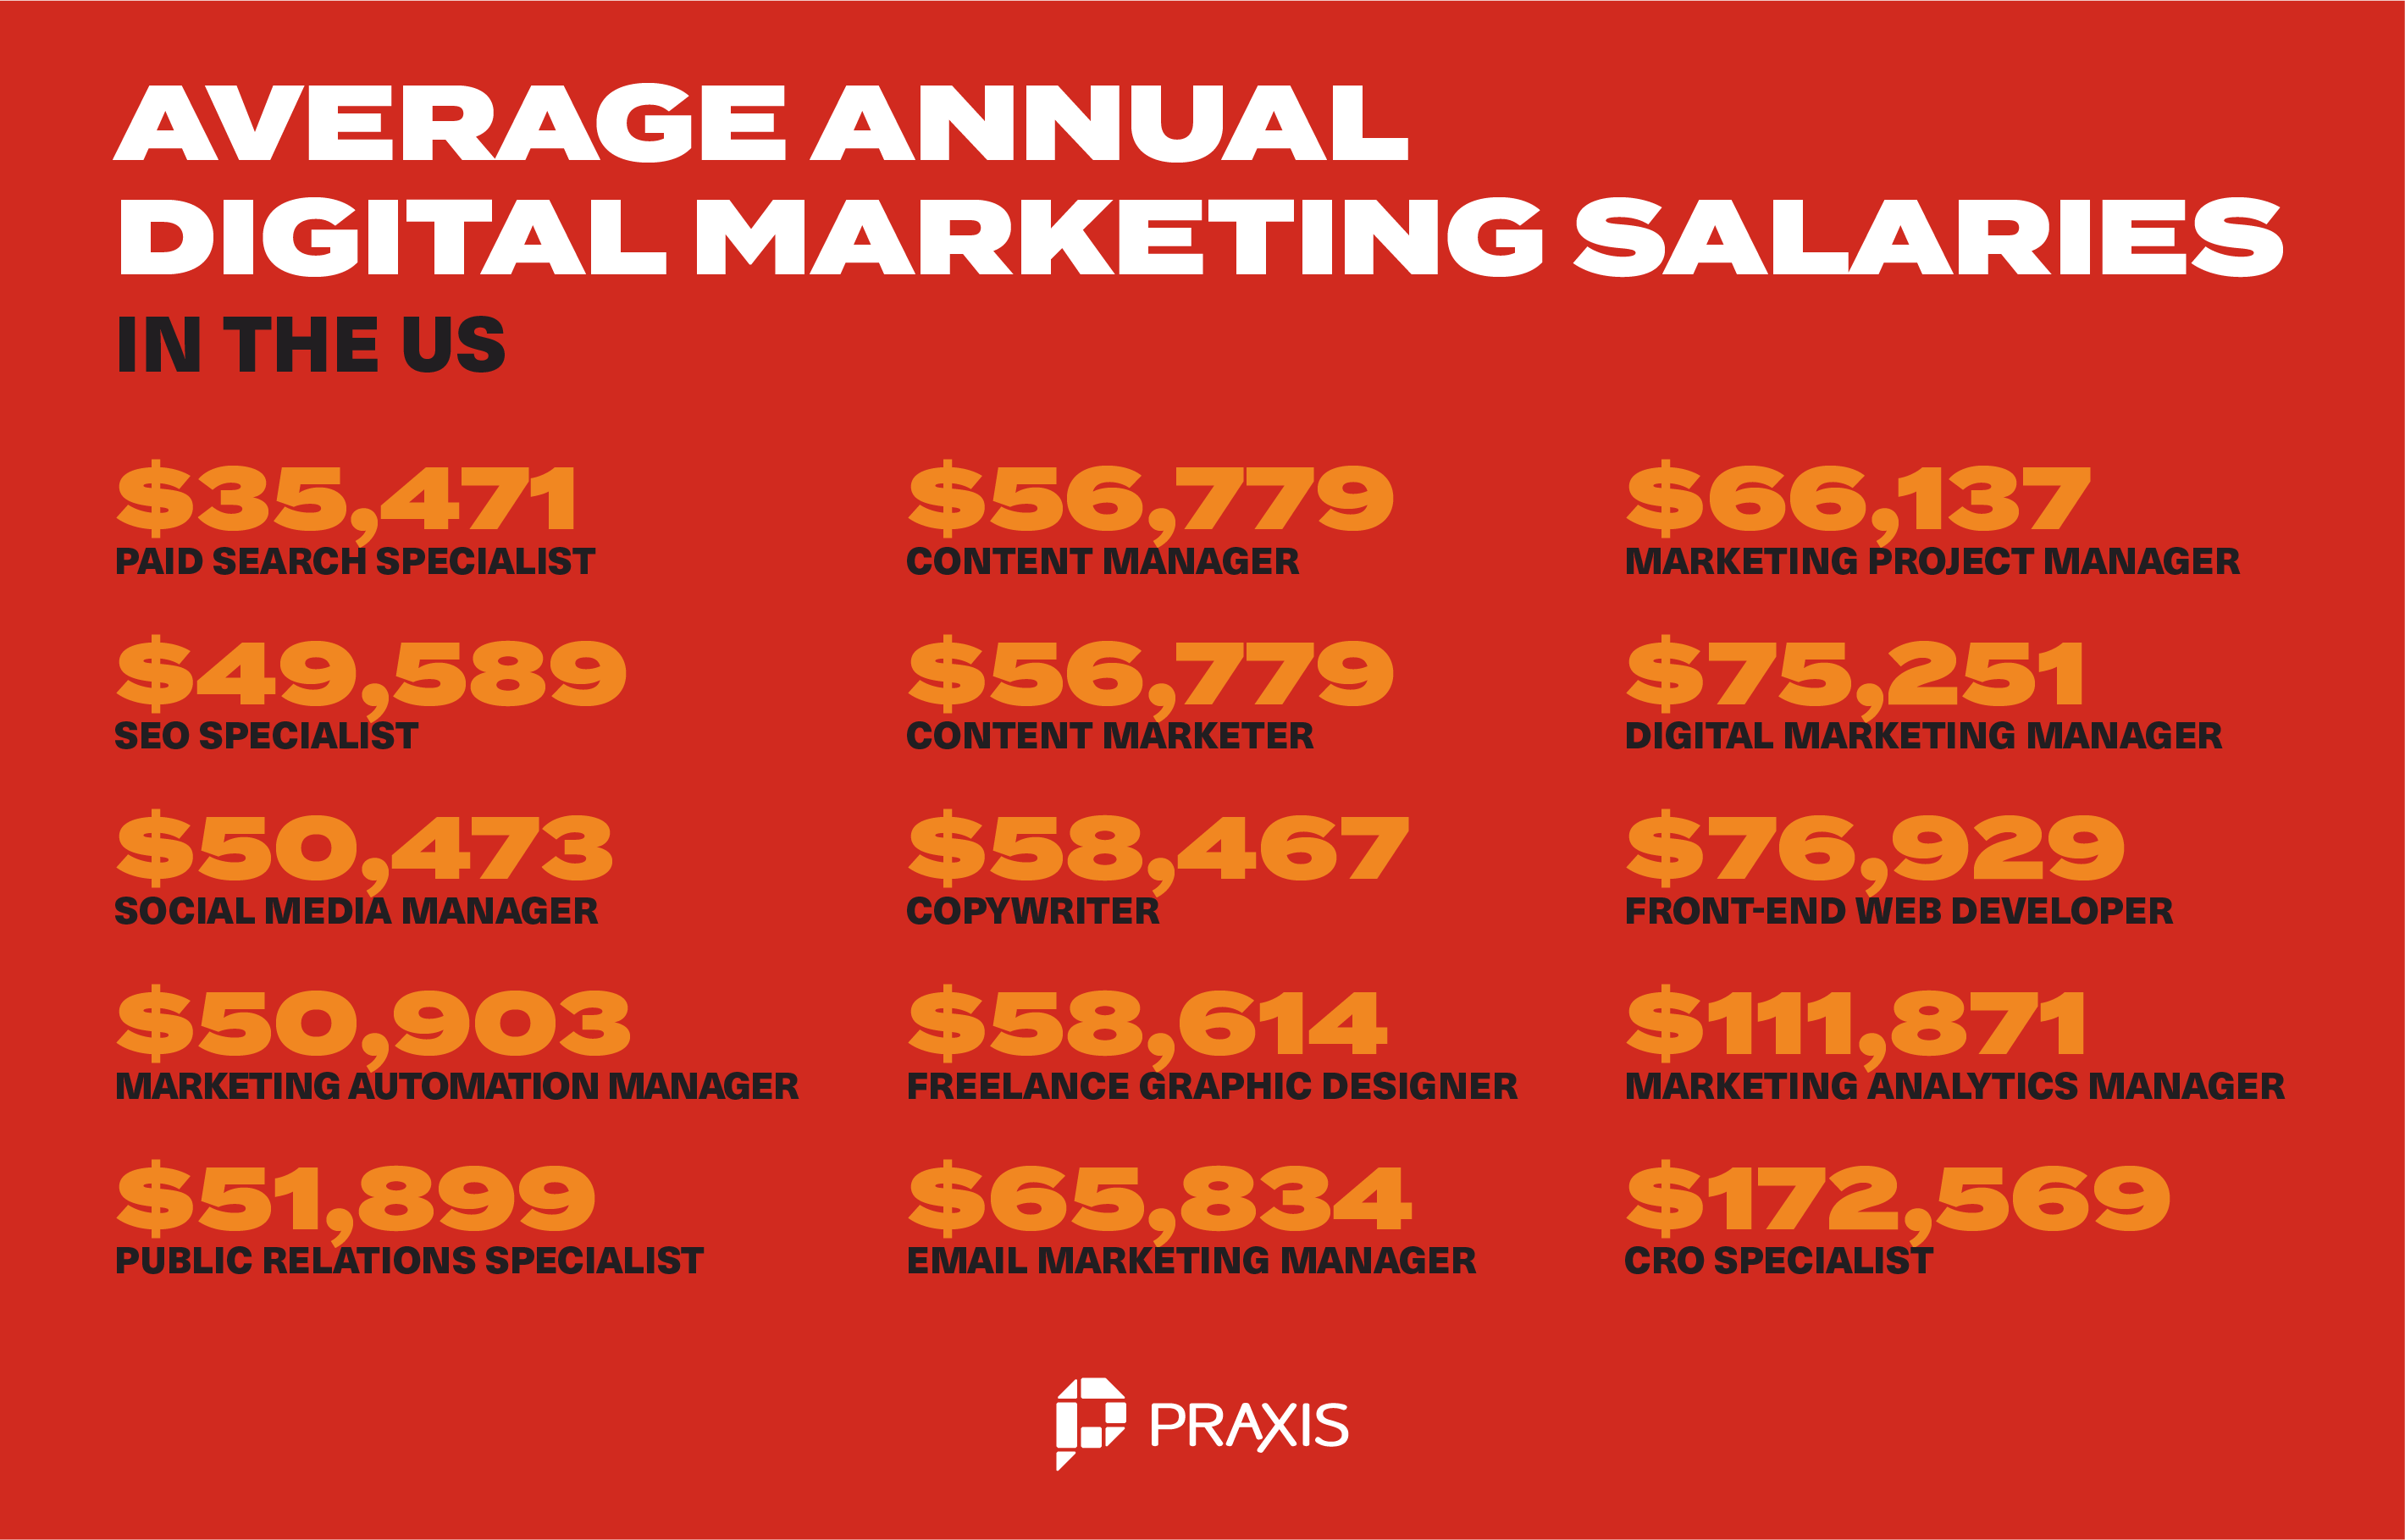 Digital Marketing salaries